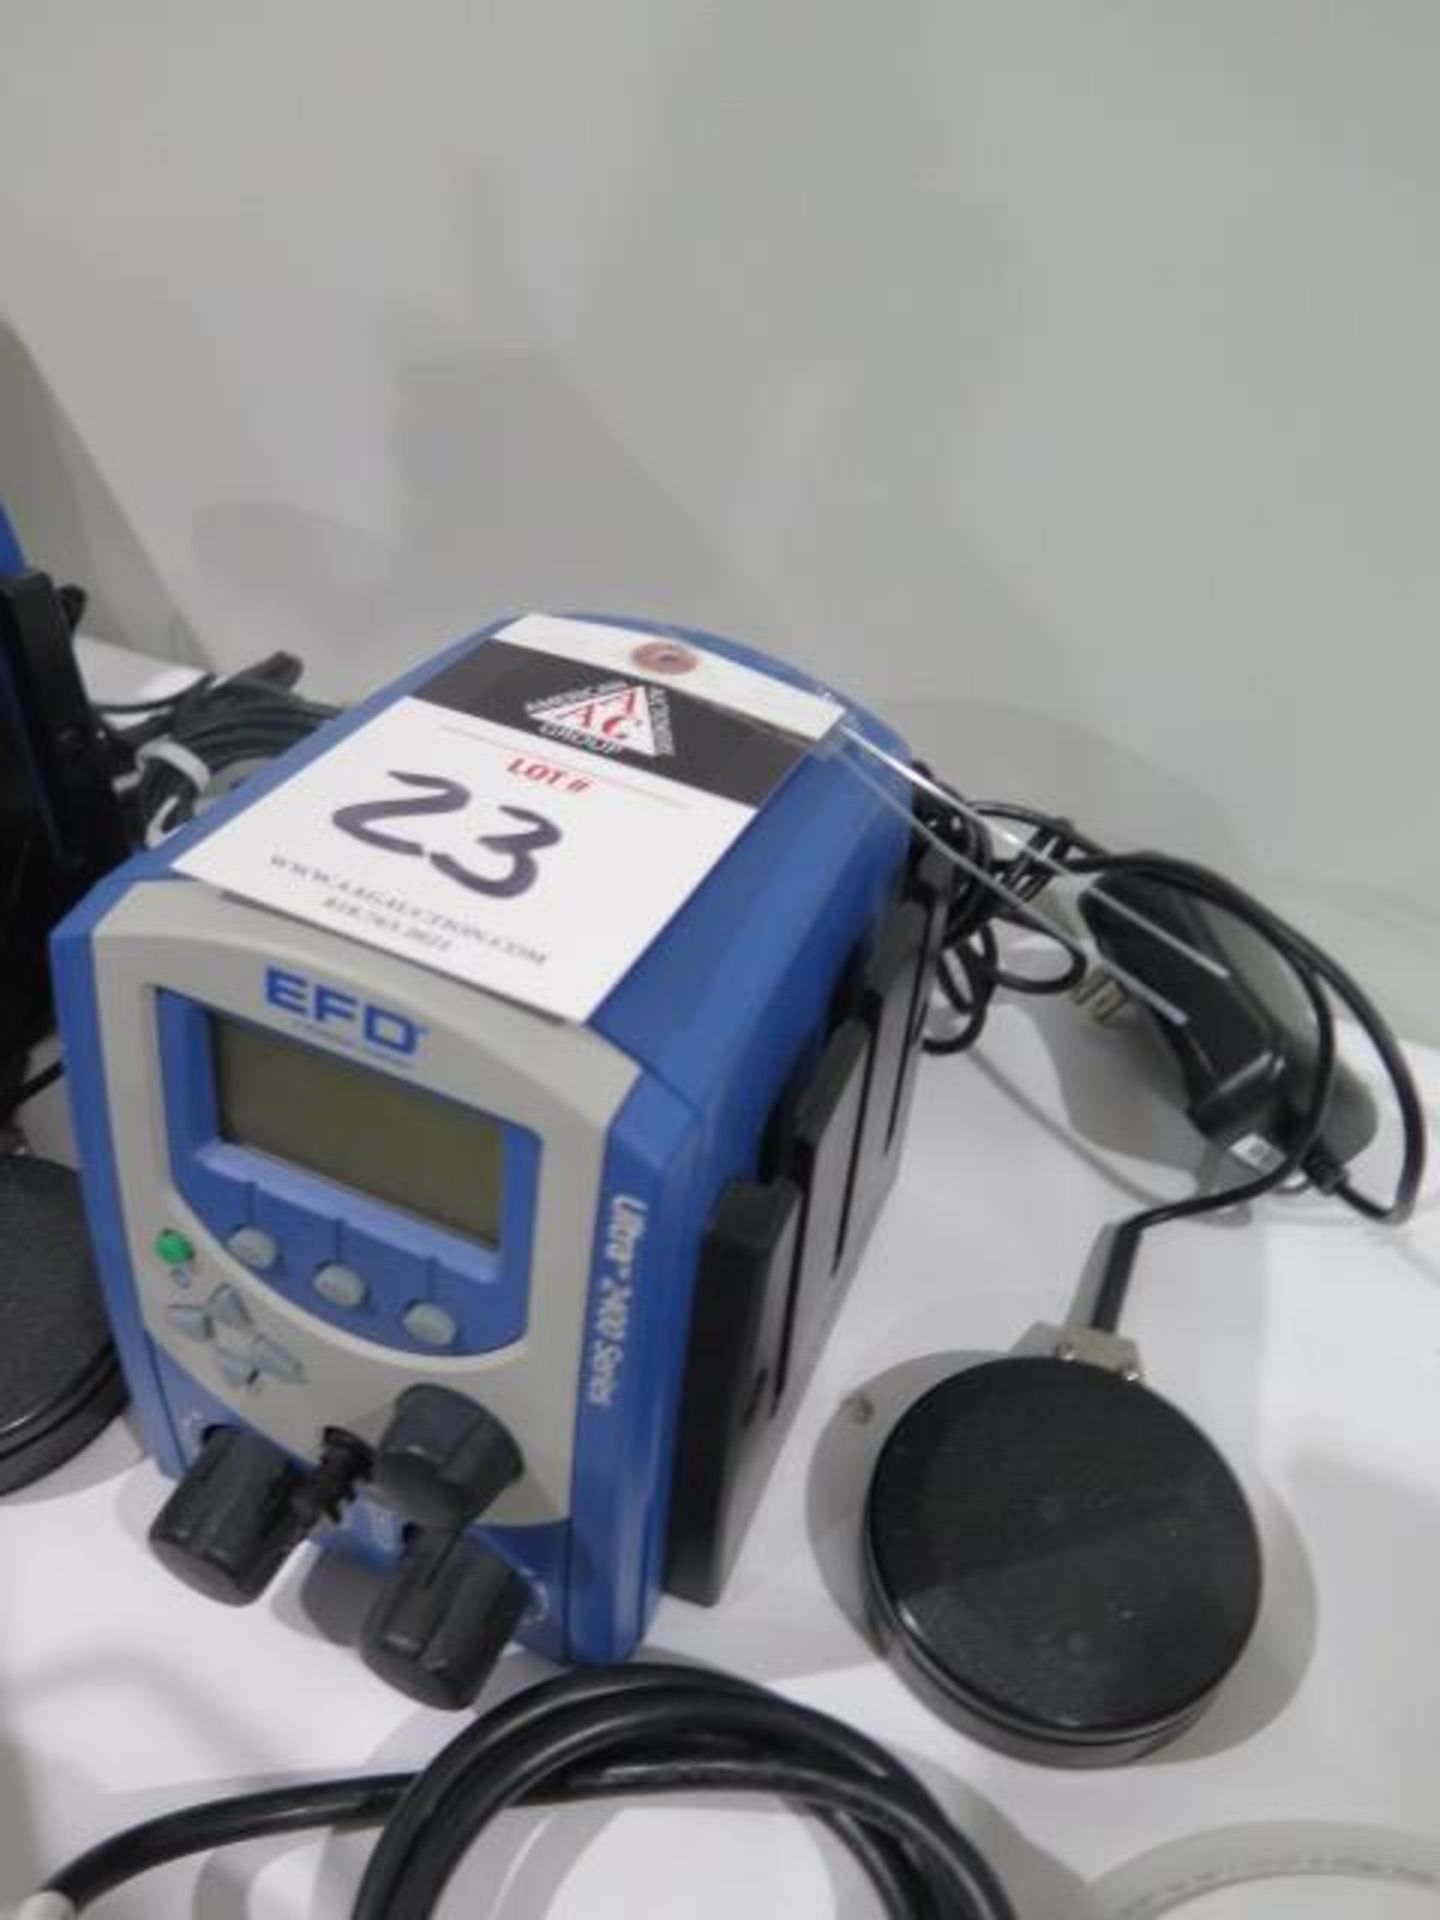 EFD Ultra 2400 Series Digital Fluid Dispensing Unit (SOLD AS-IS - NO WARRANTY) - Image 2 of 5